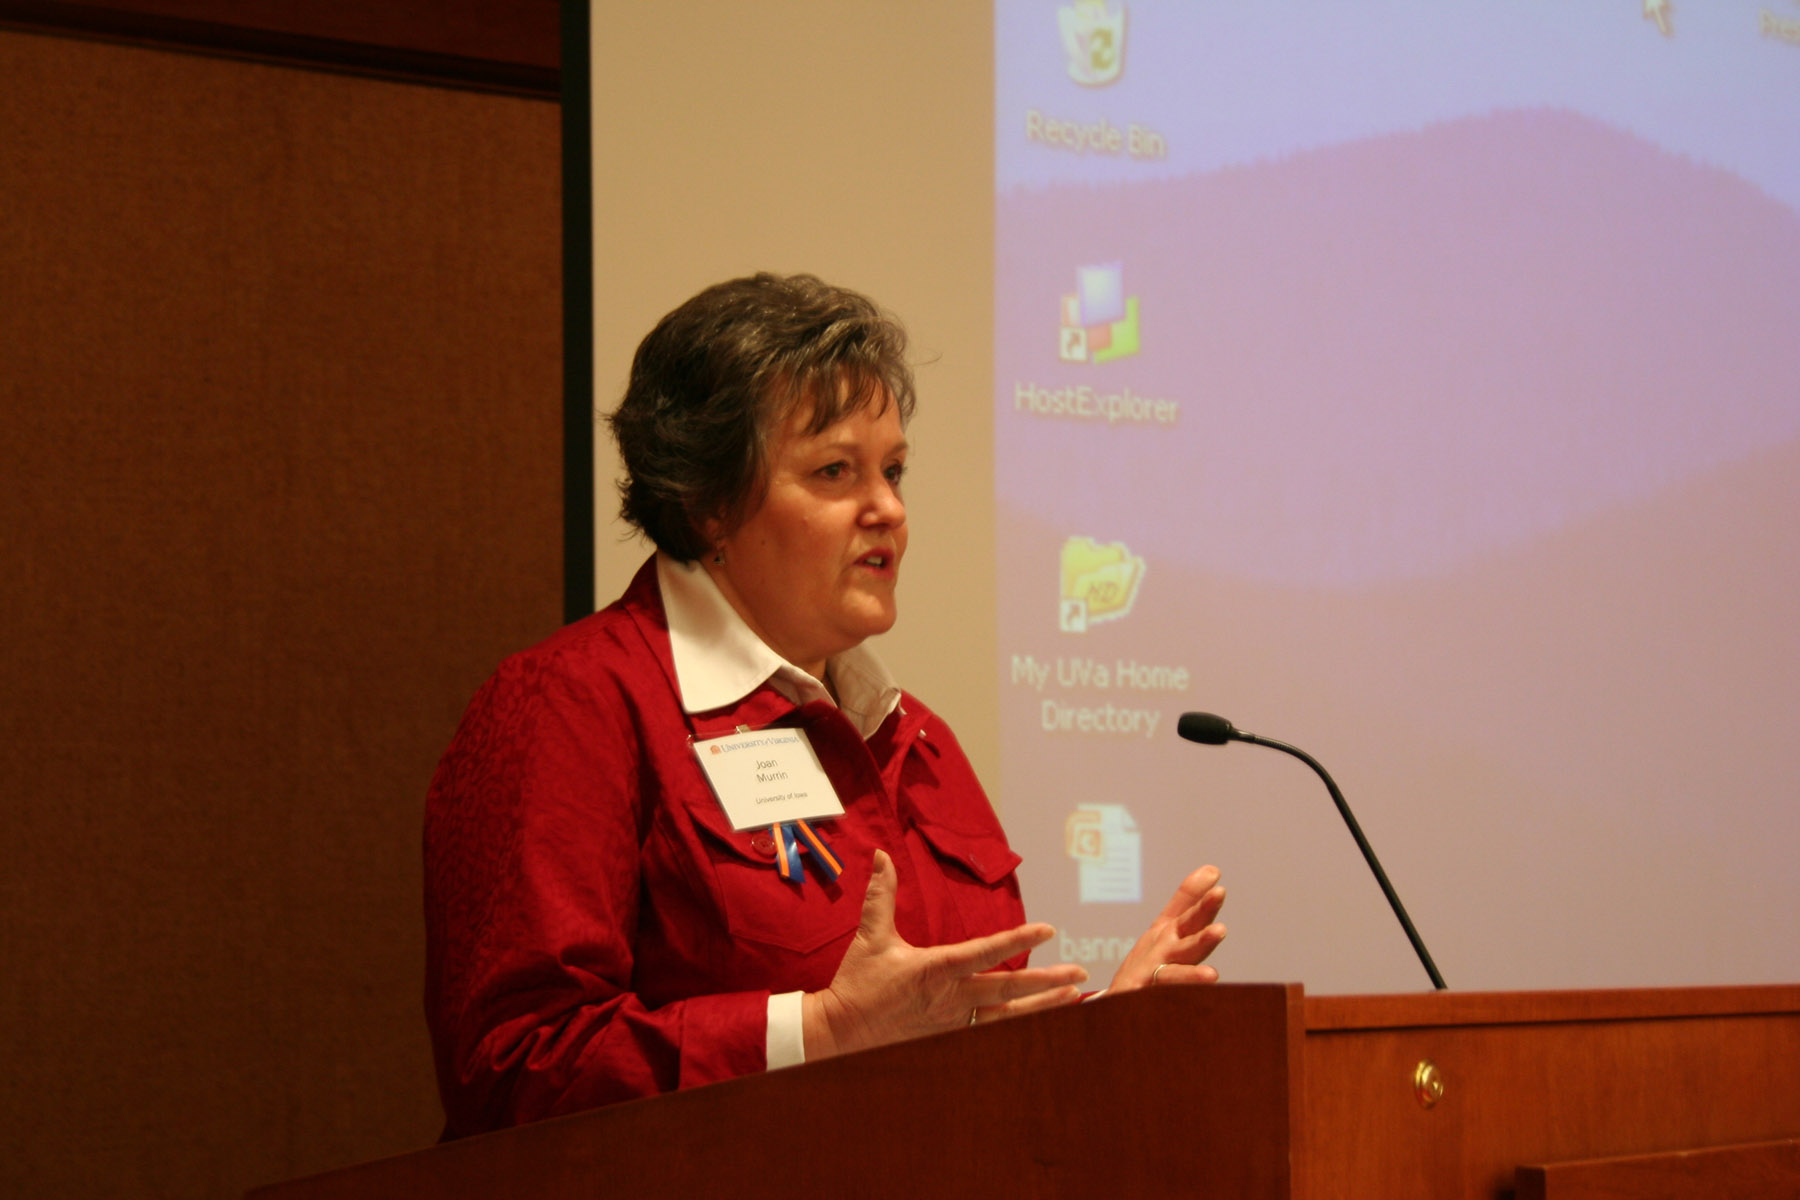 Joan Murrin speaking from a podium